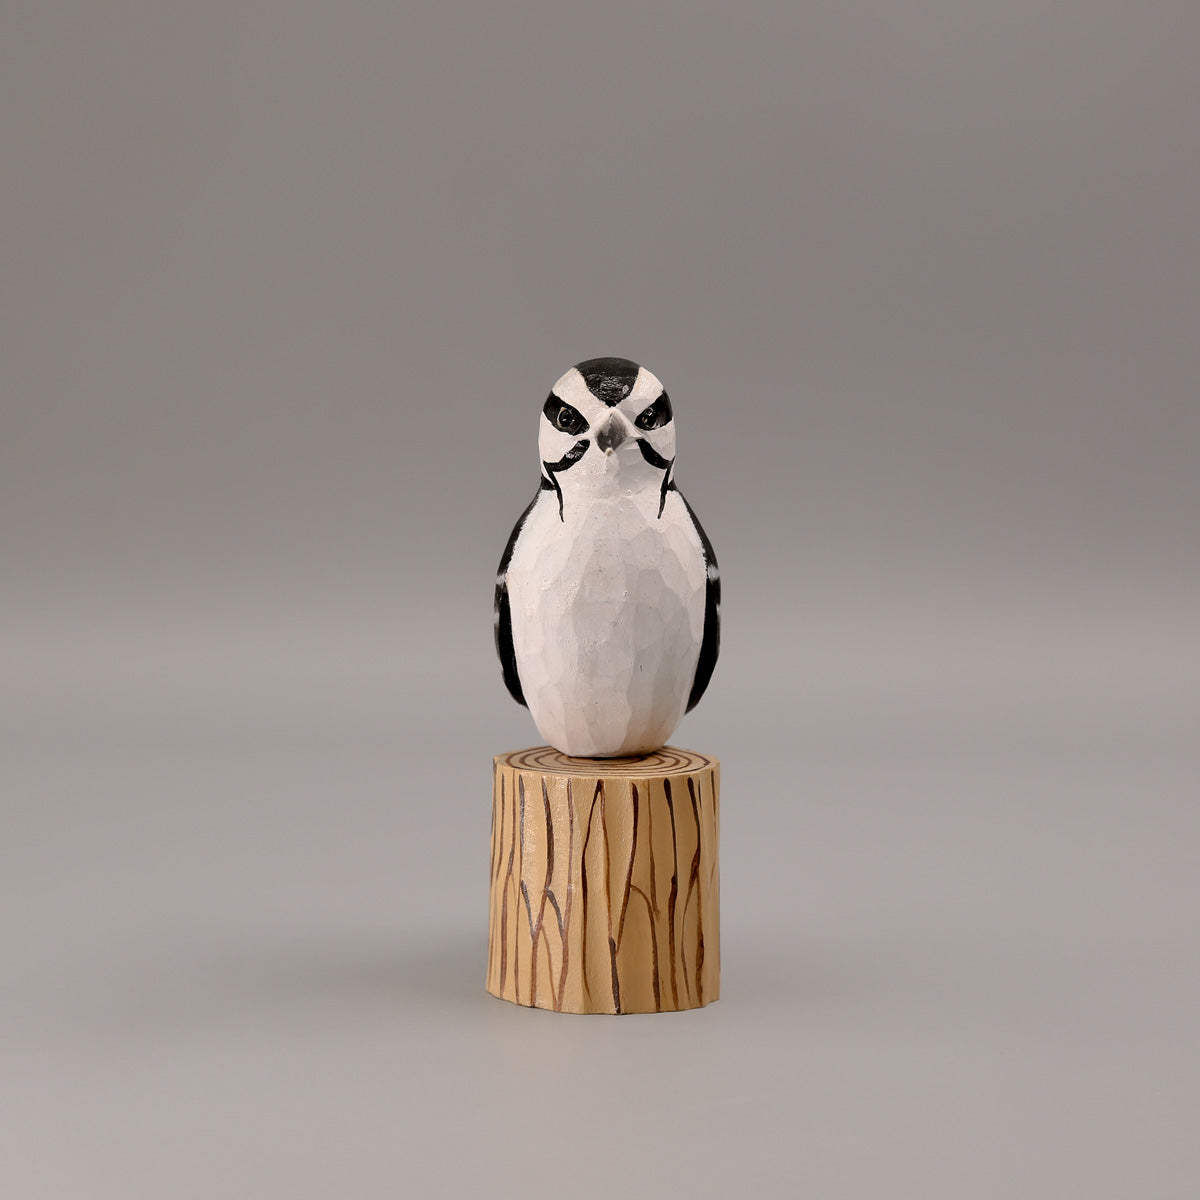 Woodpecker + Stand